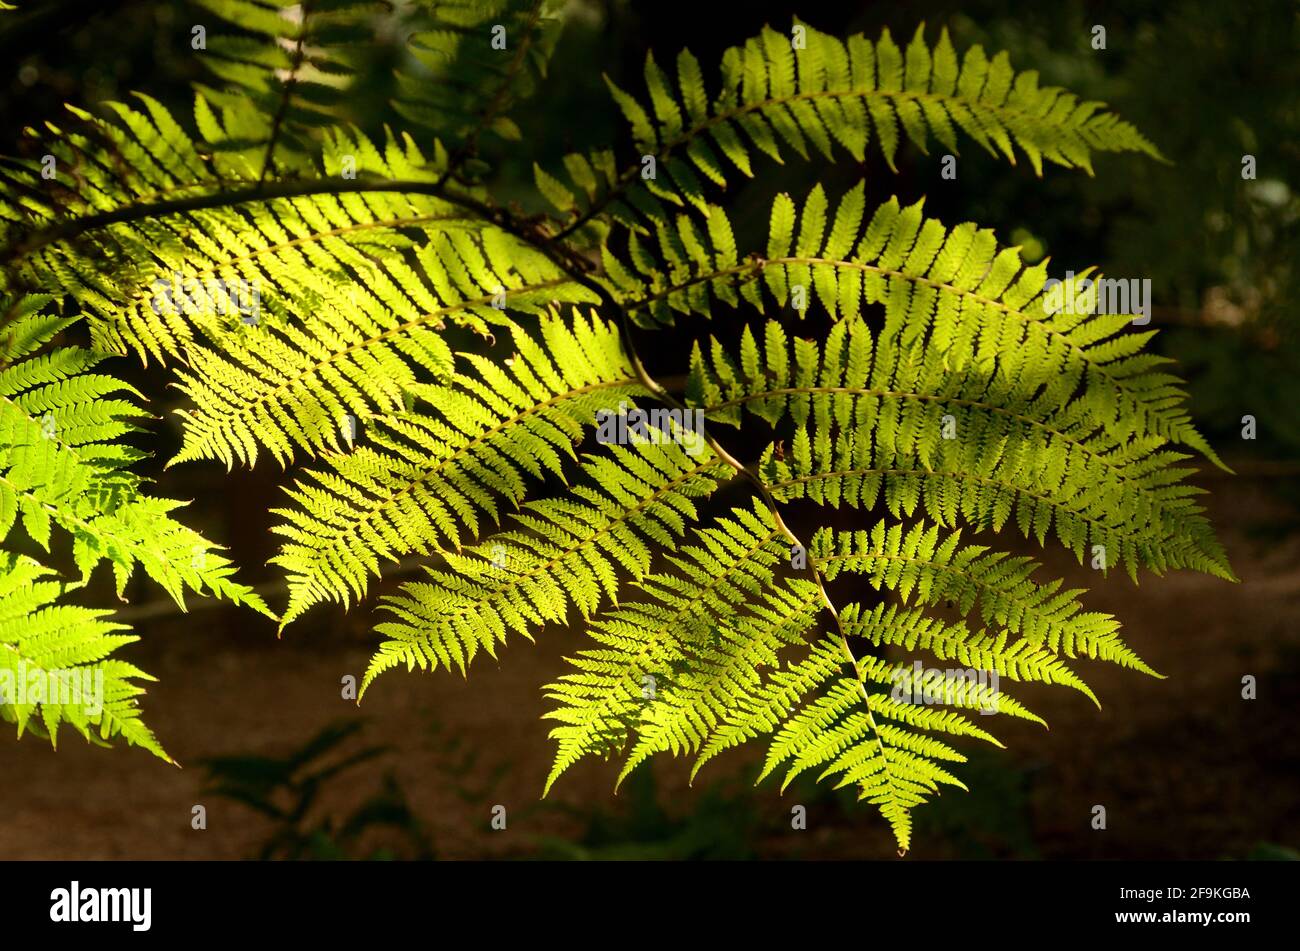 Elegant design and pattern of sun kissed fern illuminating the forest garden, simplistic elegance. Stock Photo